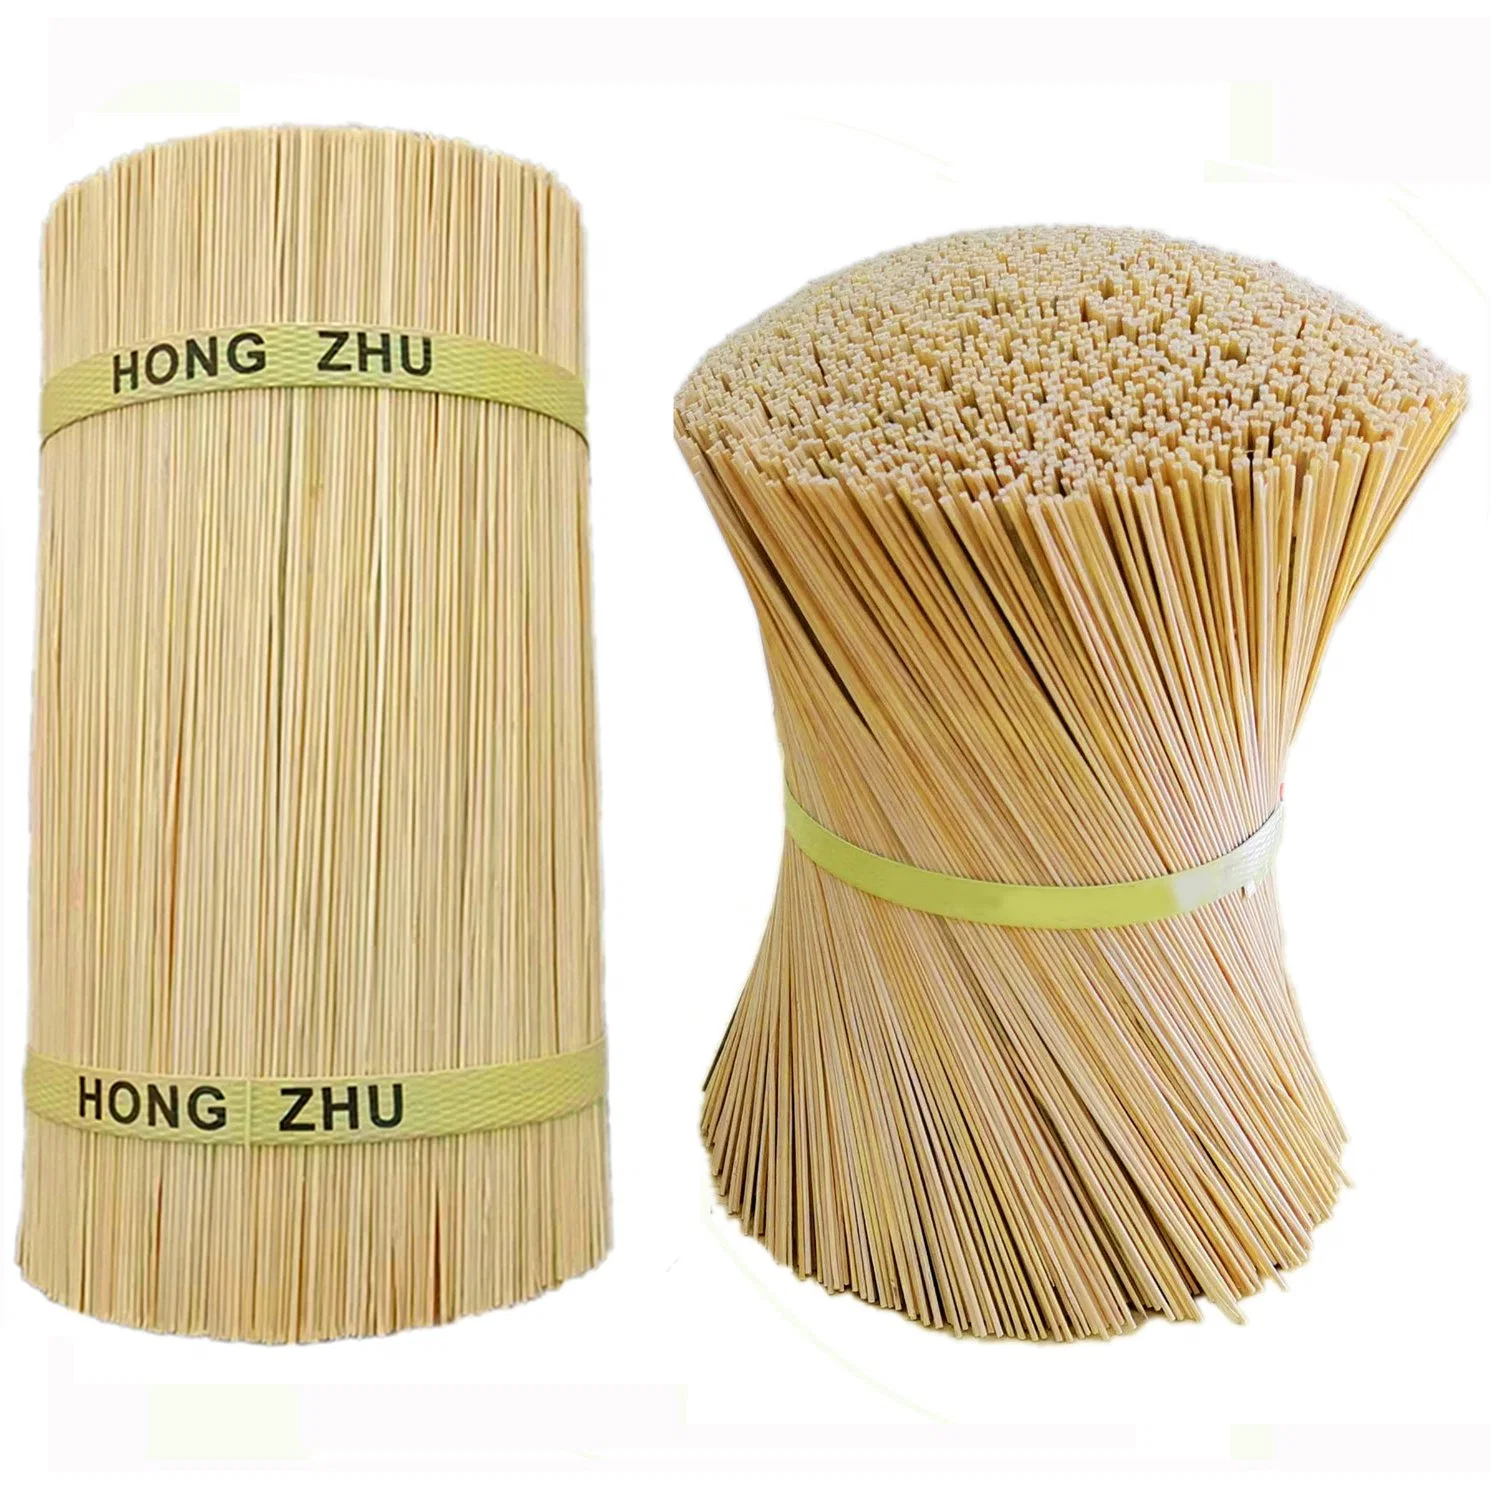 Xunwu Lianfeng Bamboo Factory 7, 8, 9, 10, 12 Inch Agarbatti Bamboo Sticks for Incense